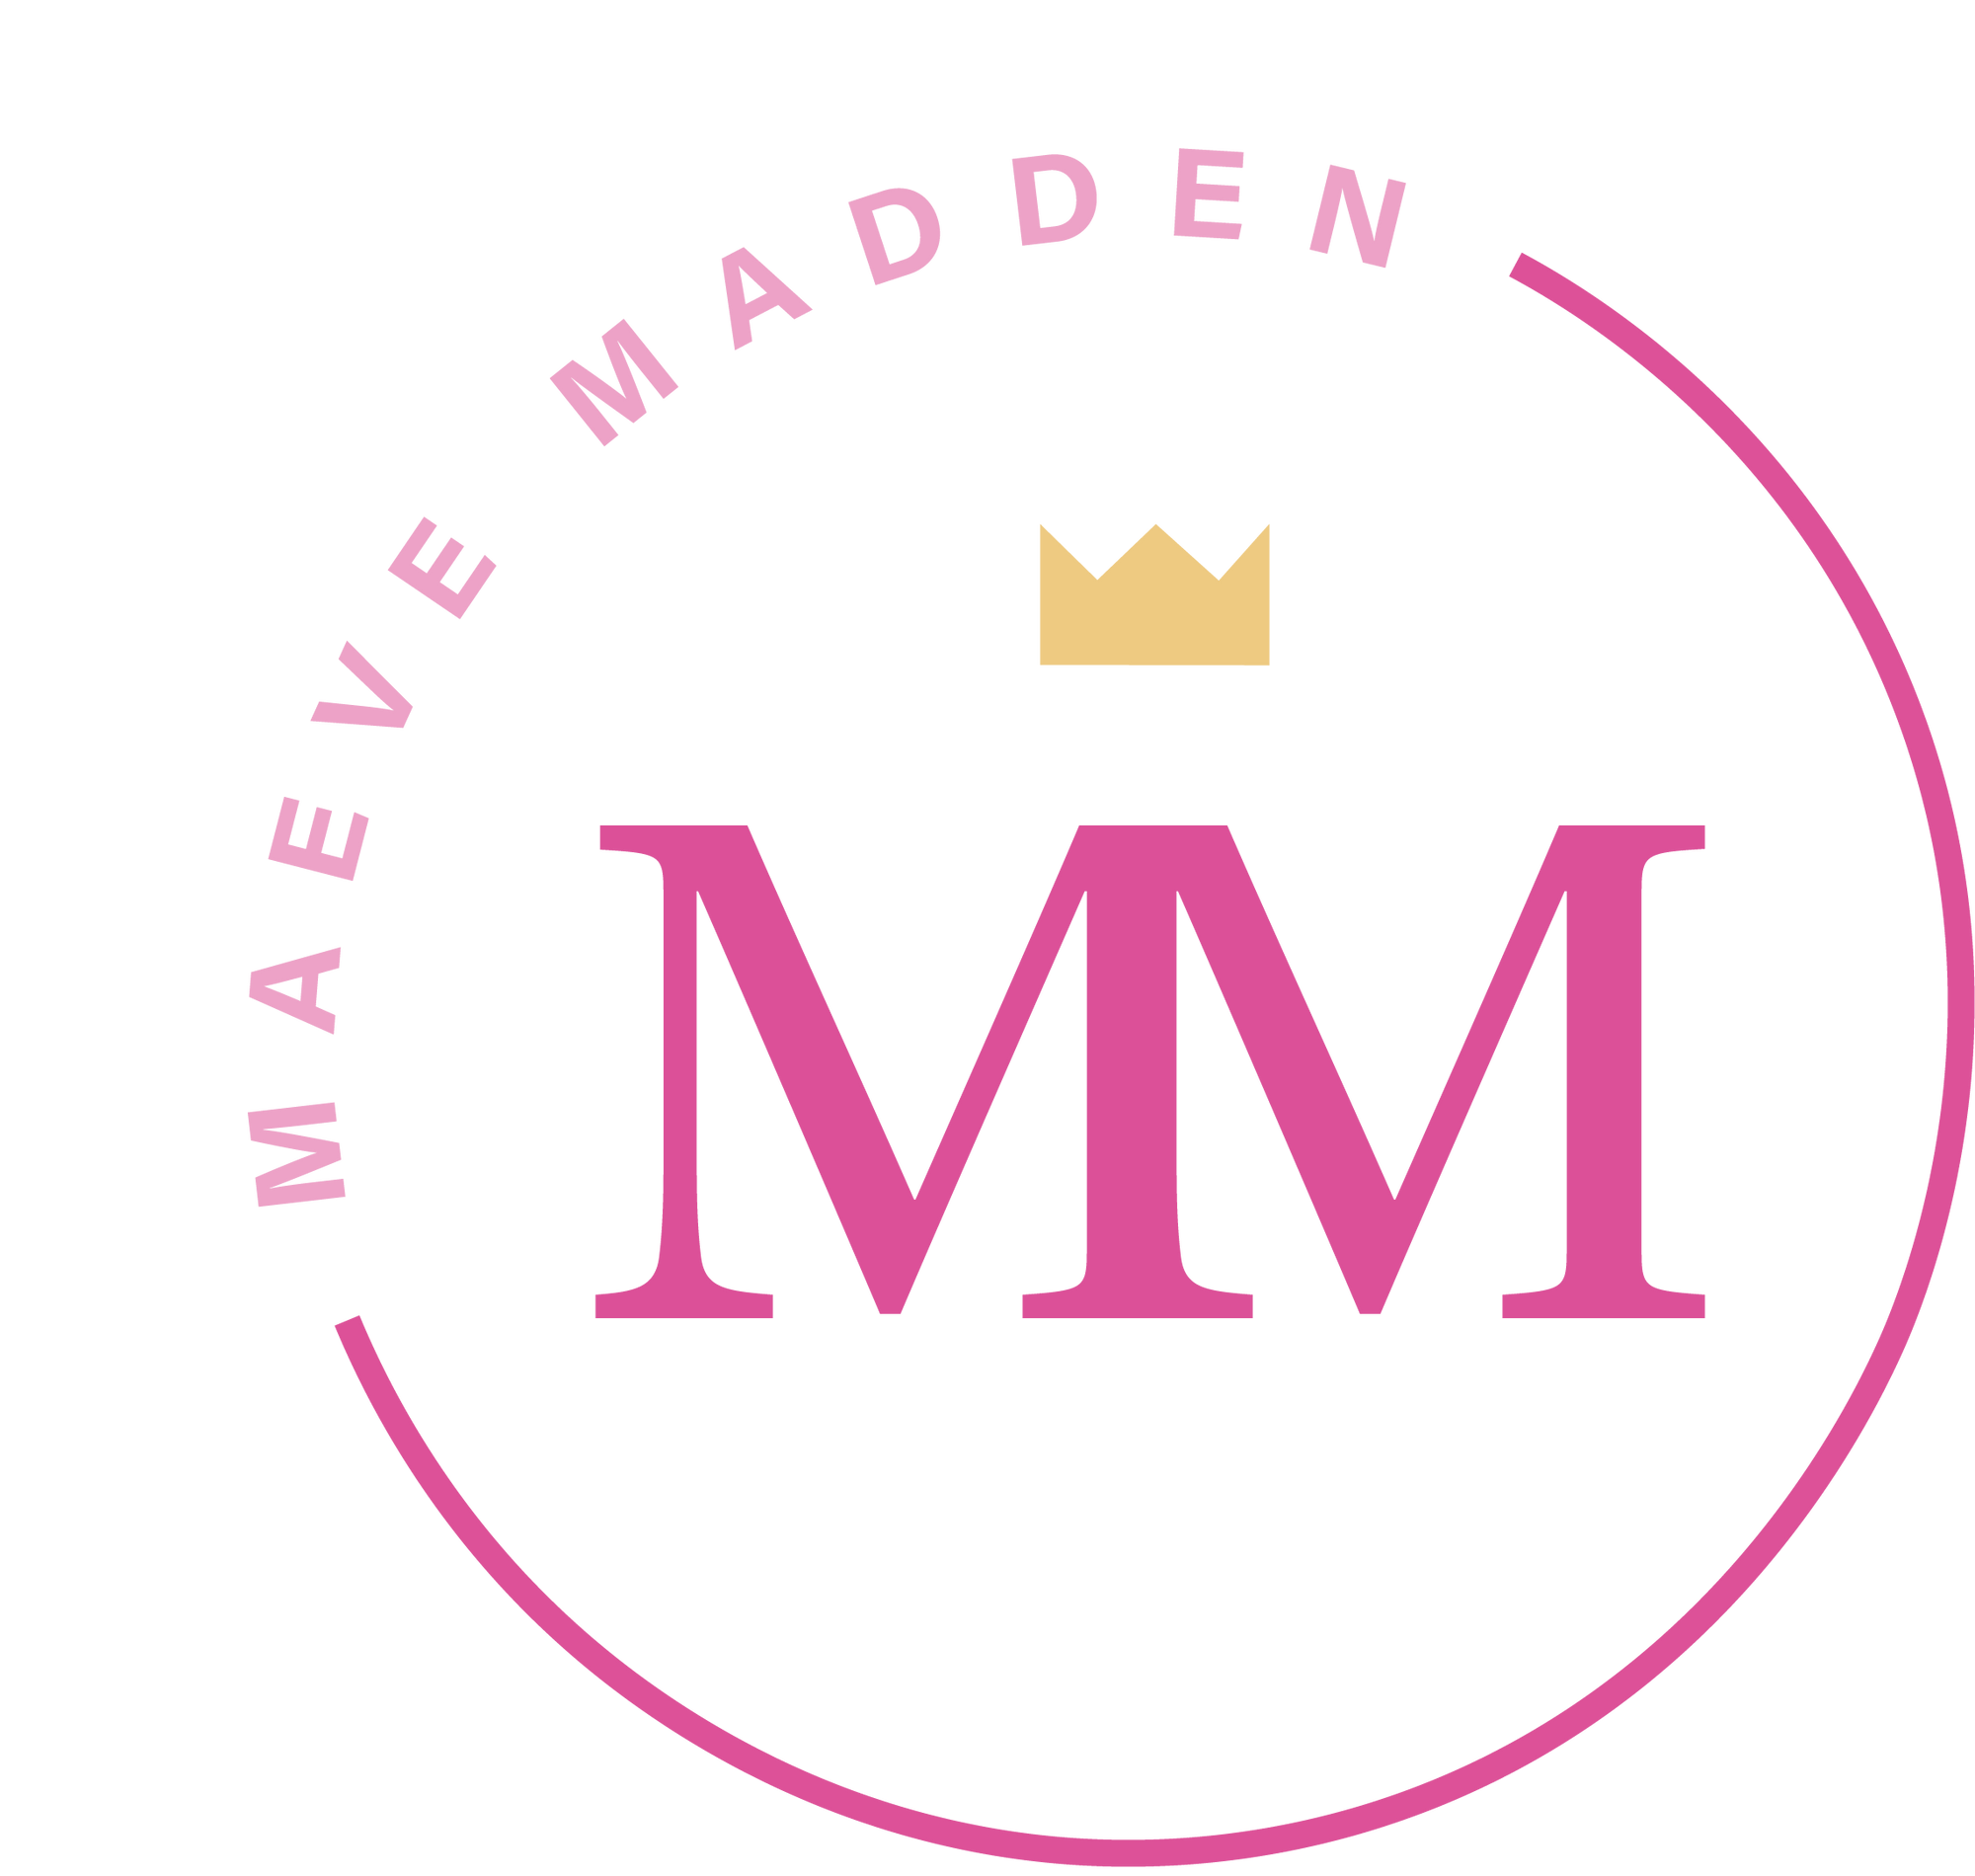 Maeve Madden